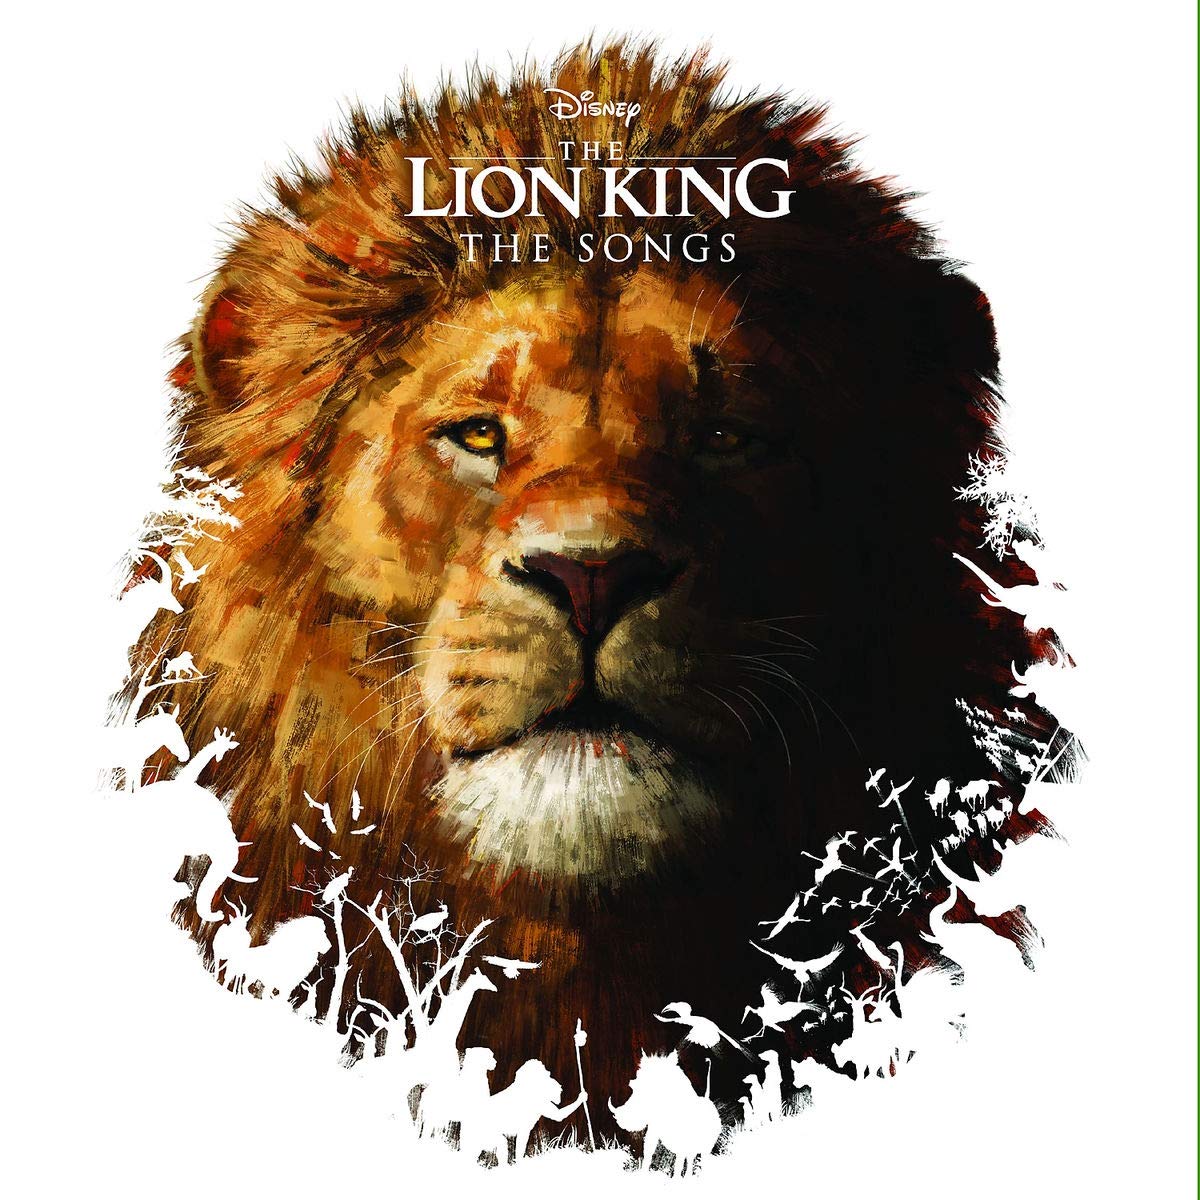 The Lion King - The Songs, Disney (Vinyl LP)